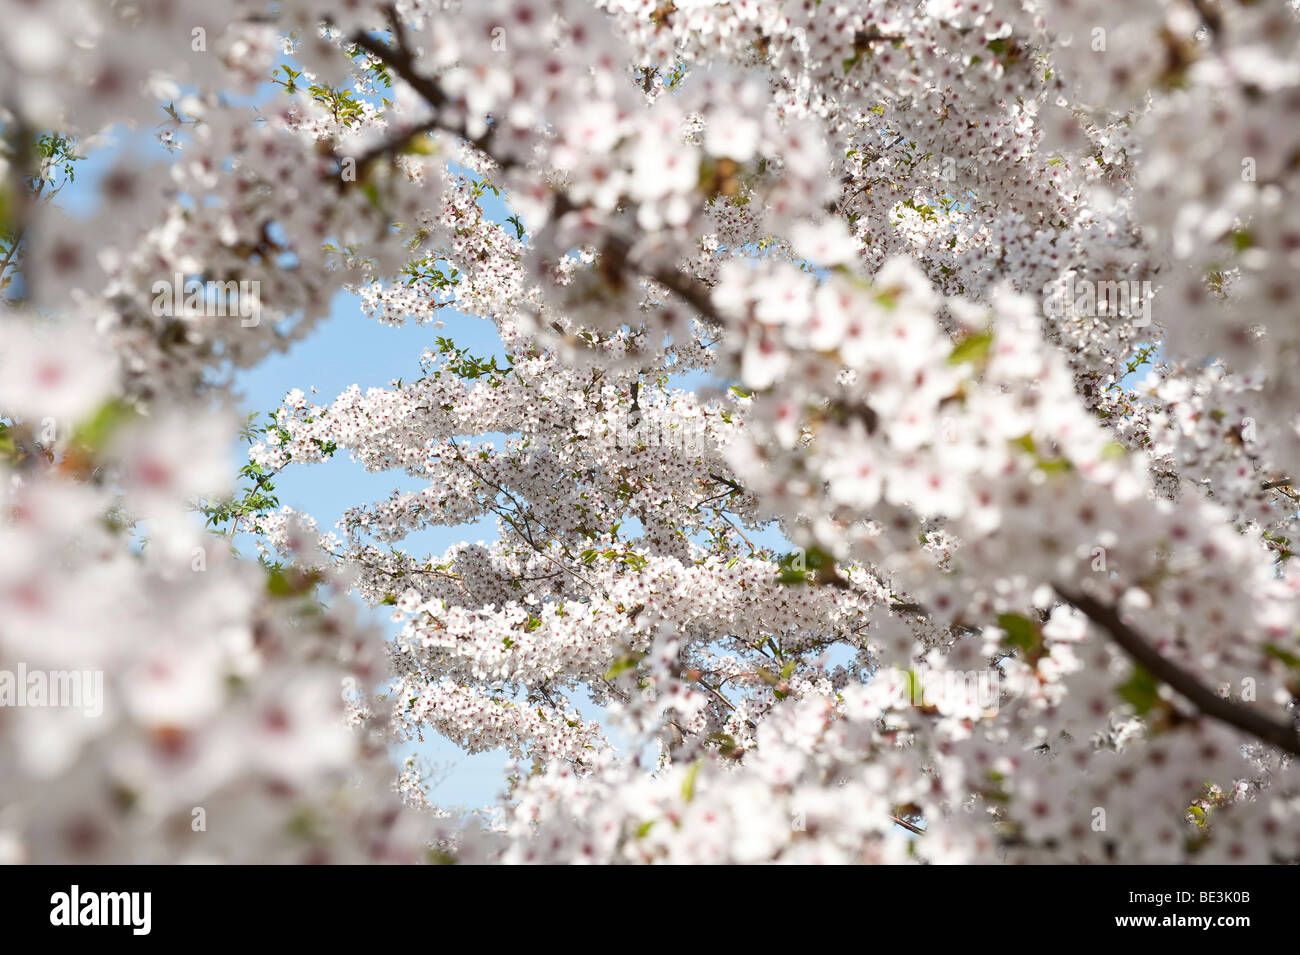 Cherry blossom, Gaerten der Welt gardens of the world in the recreational park Marzahn, Berlin, Germany, Europe Stock Photo